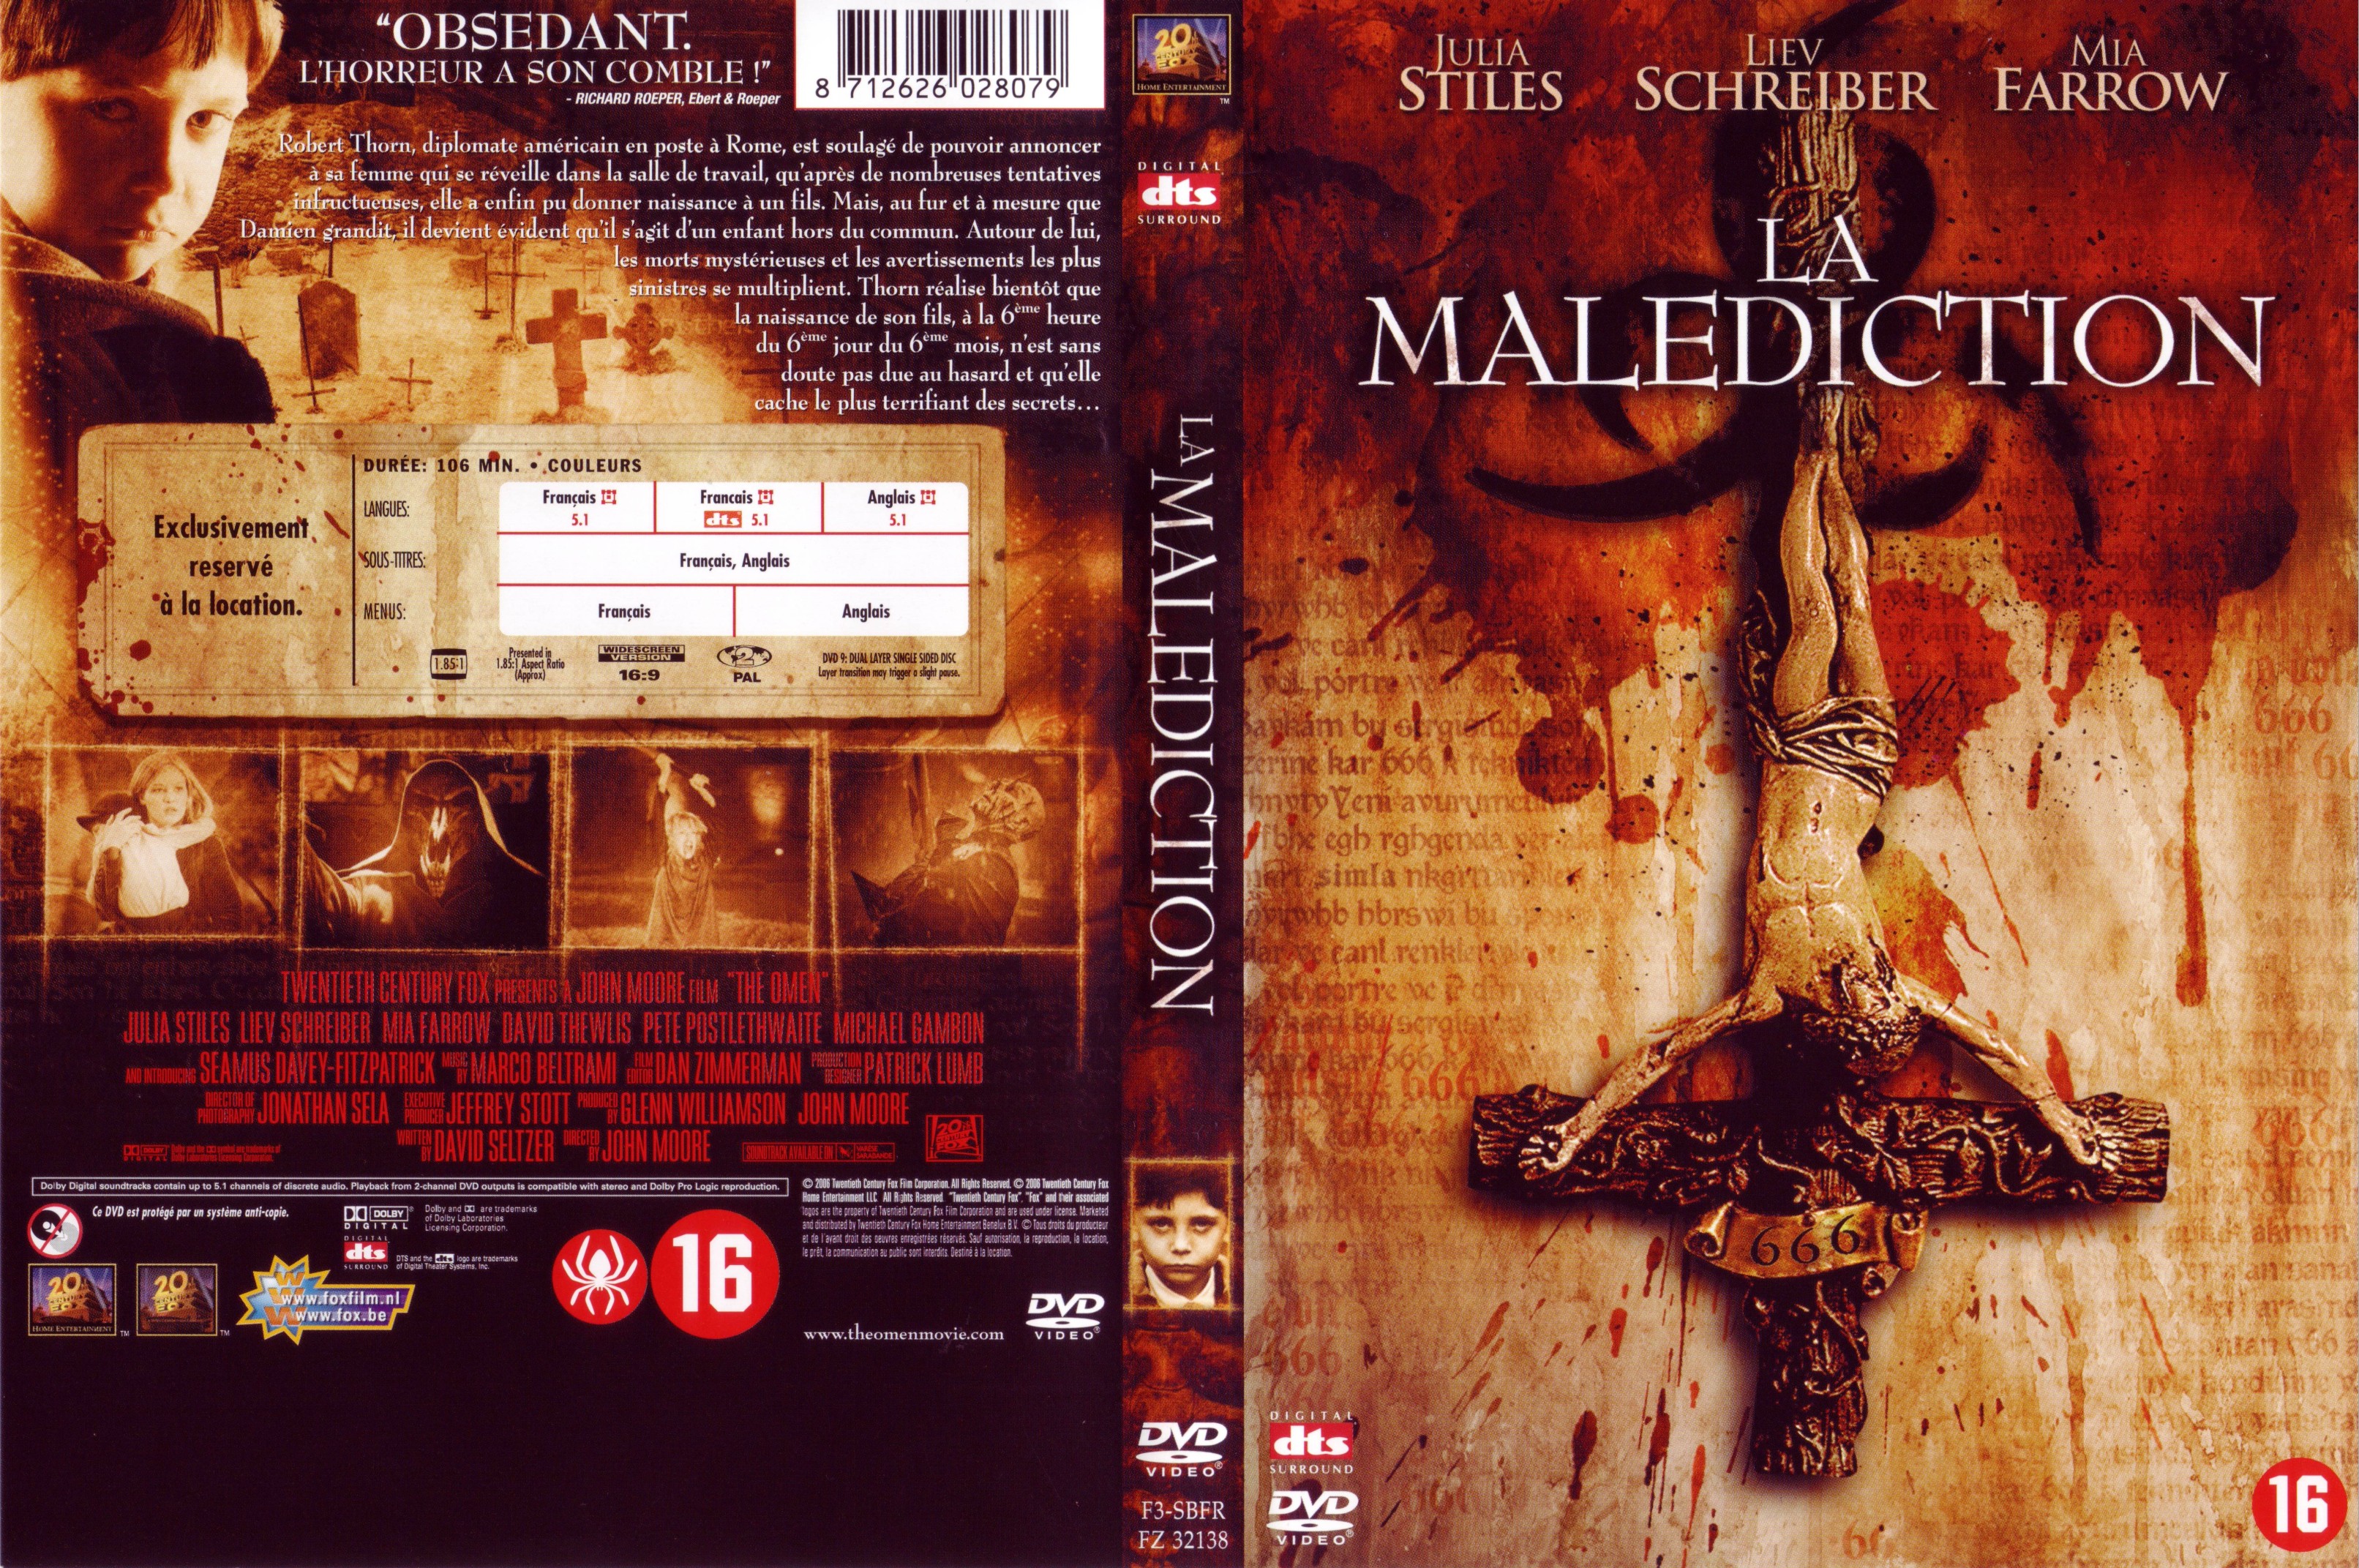 Jaquette DVD 666 La maldiction